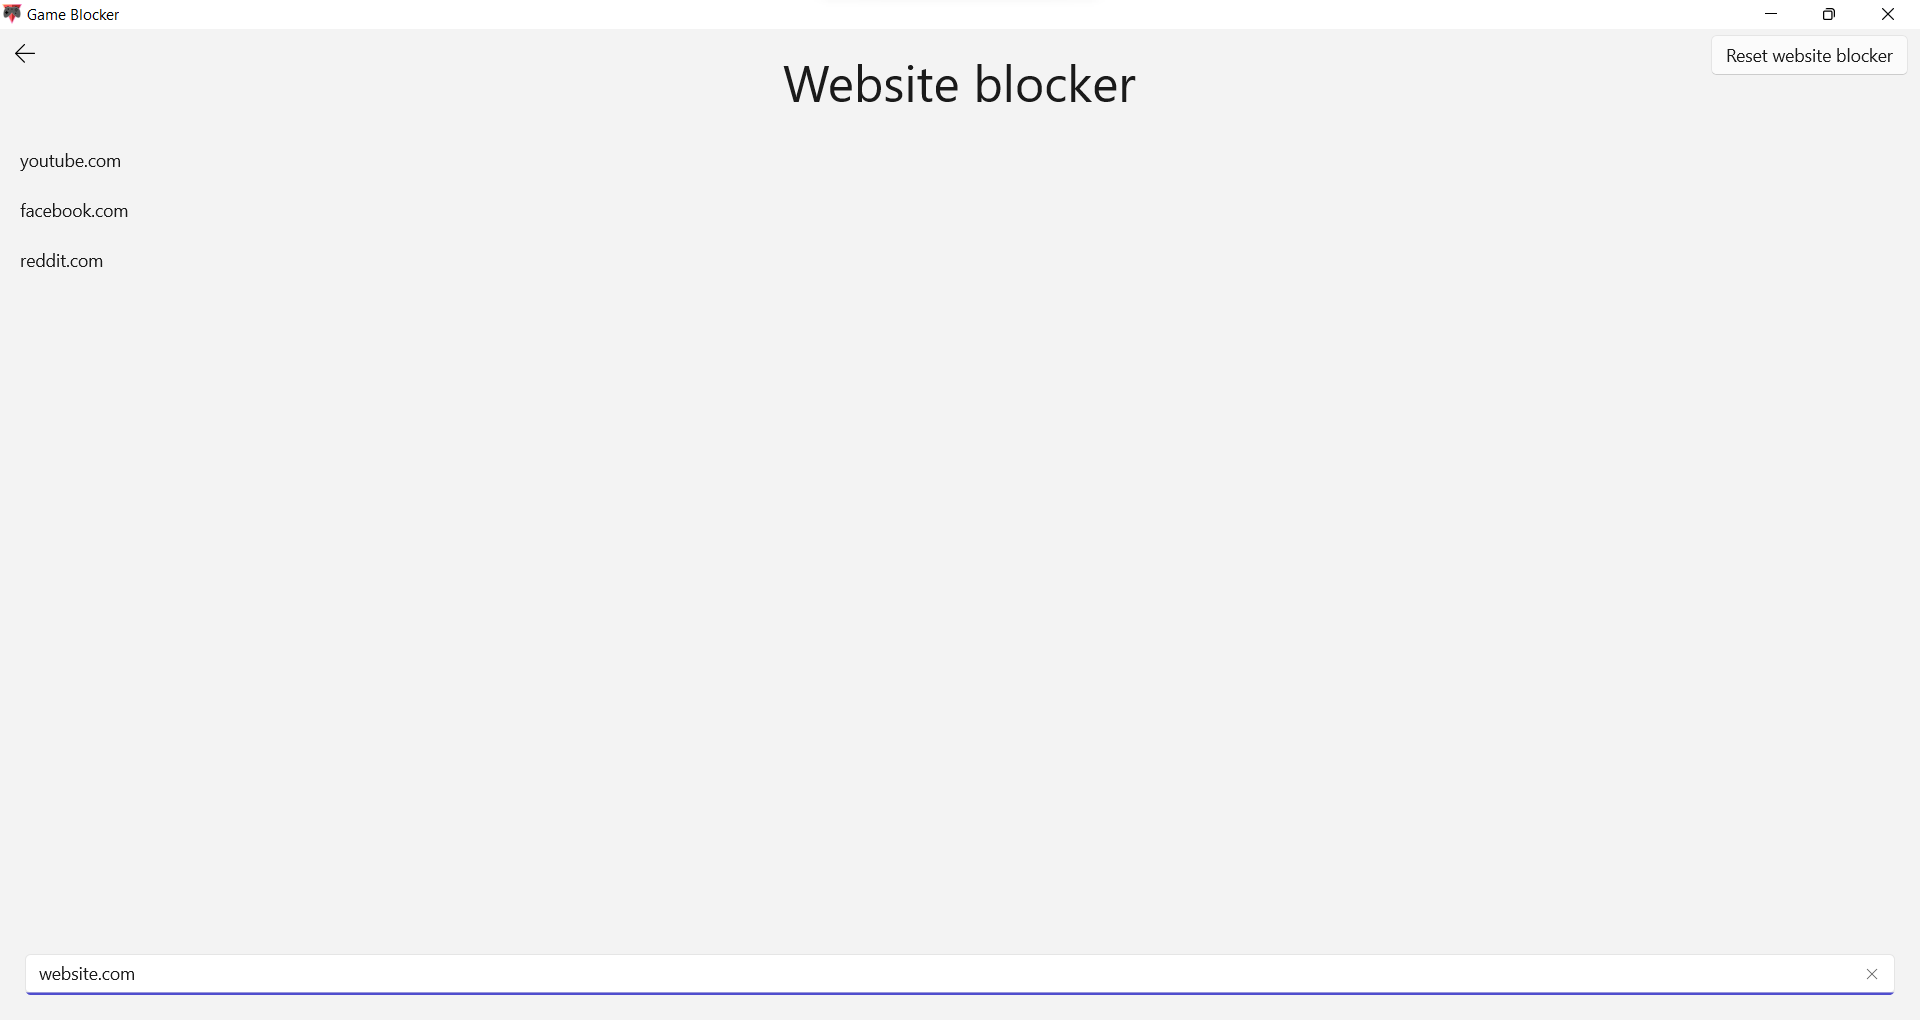 Add websites, delete websites, or reset the website block list with 1 click.